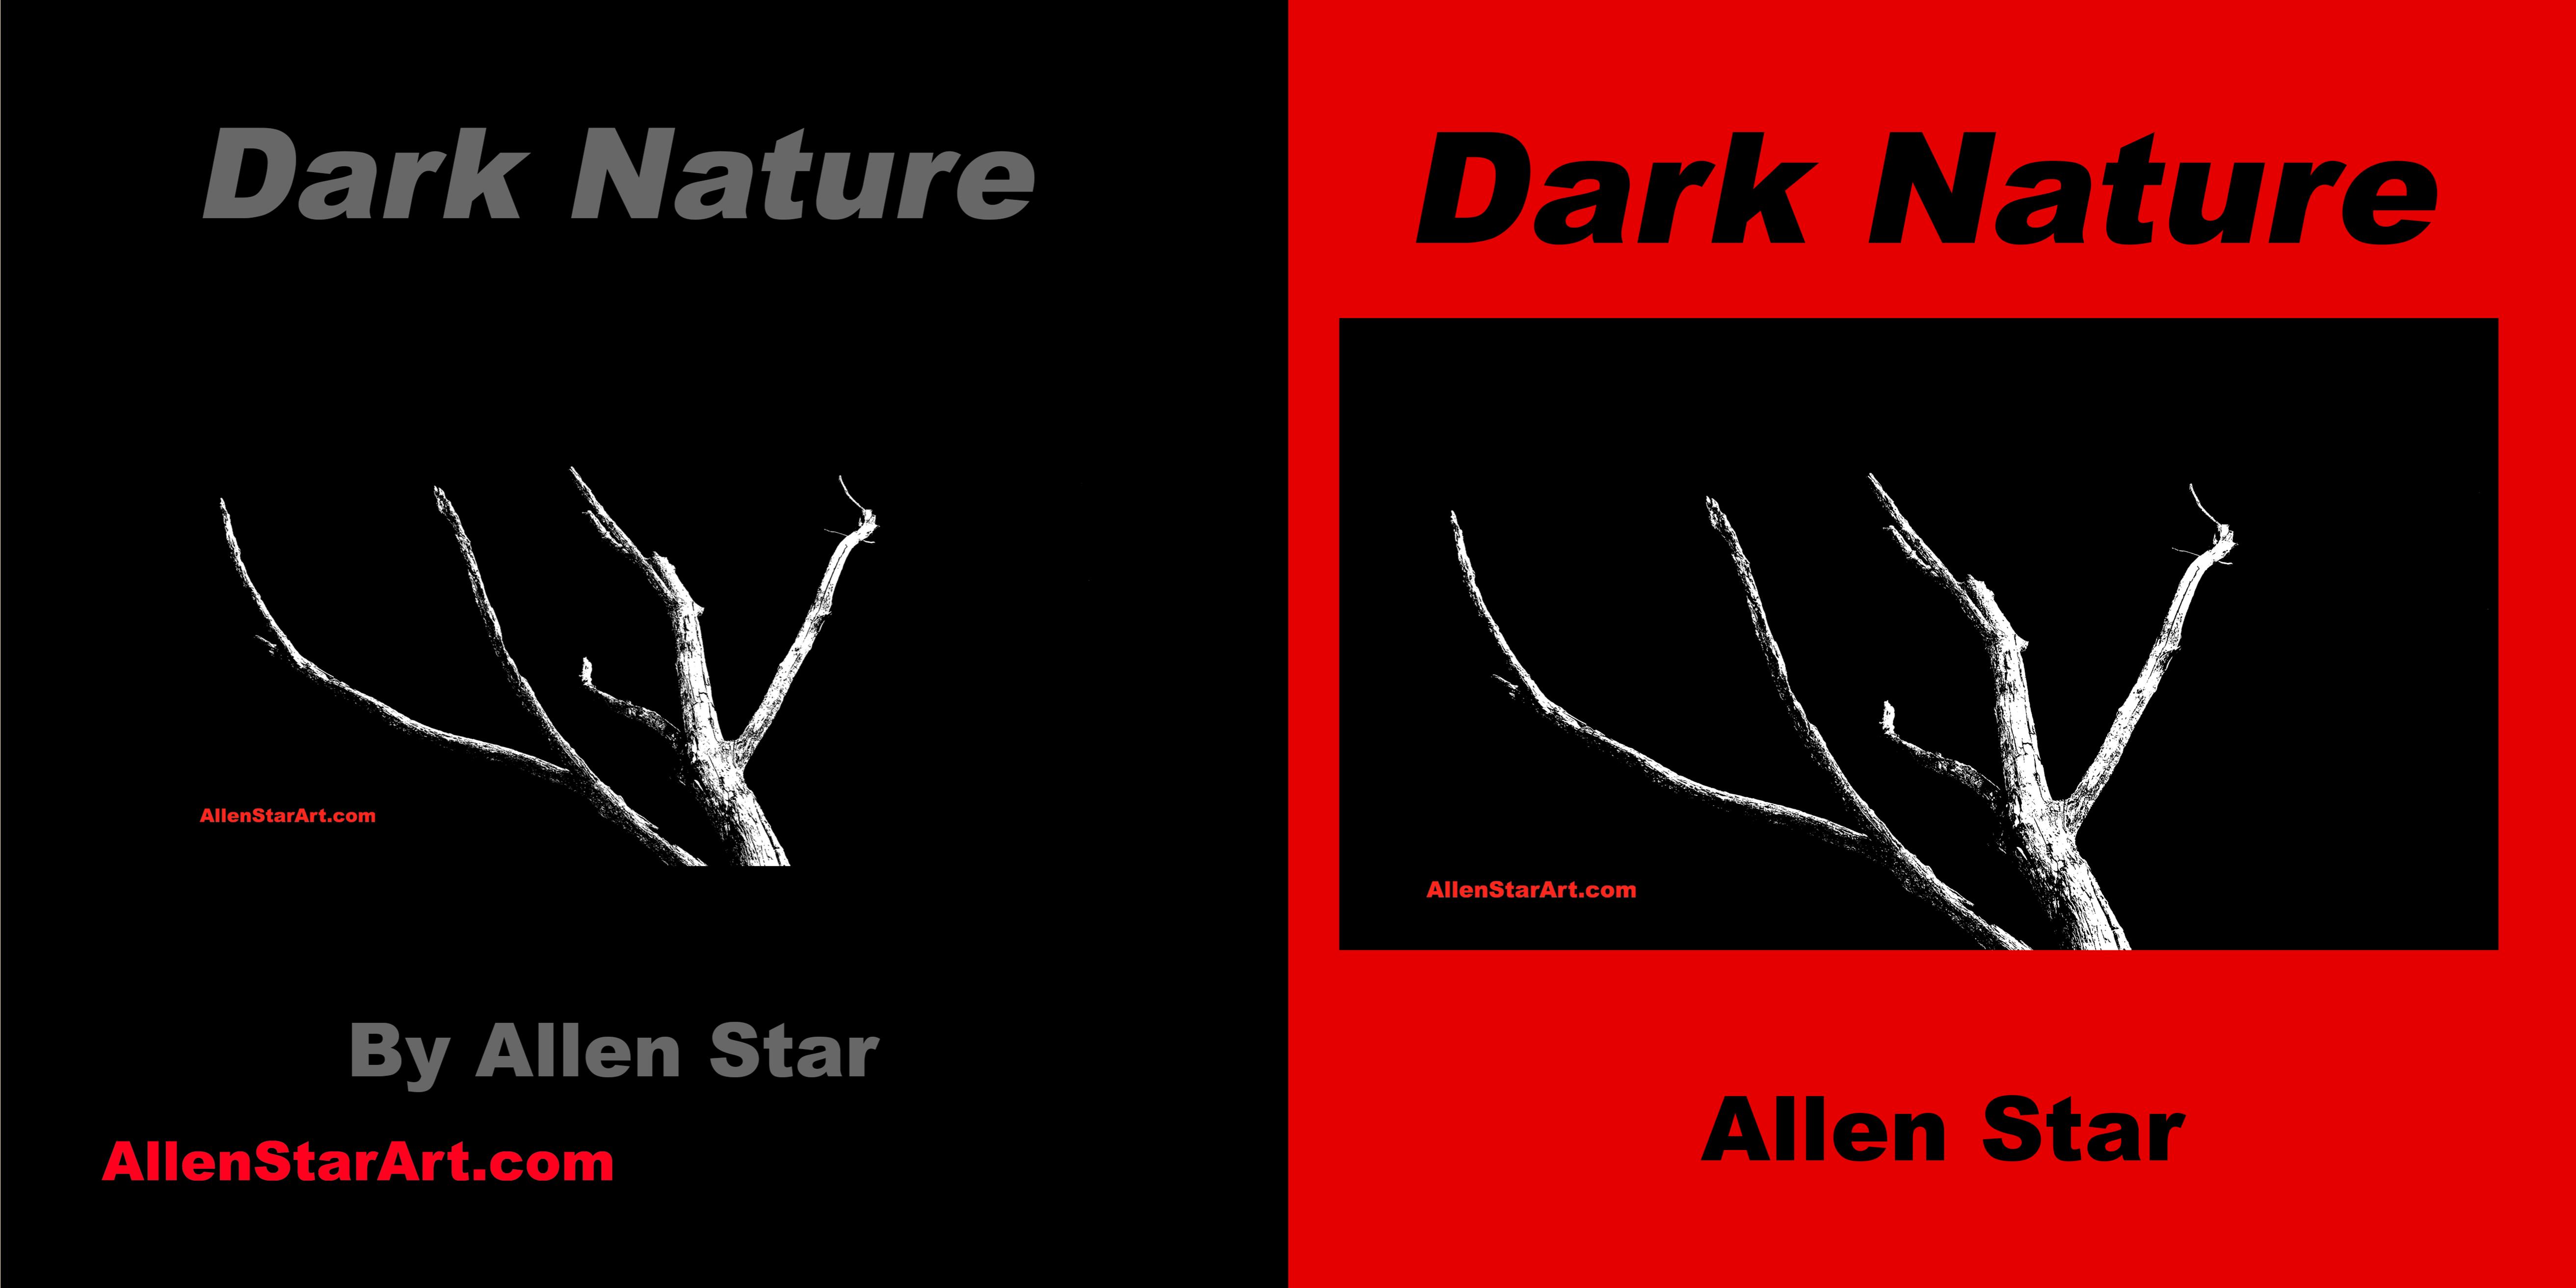 Dark Nature cover image